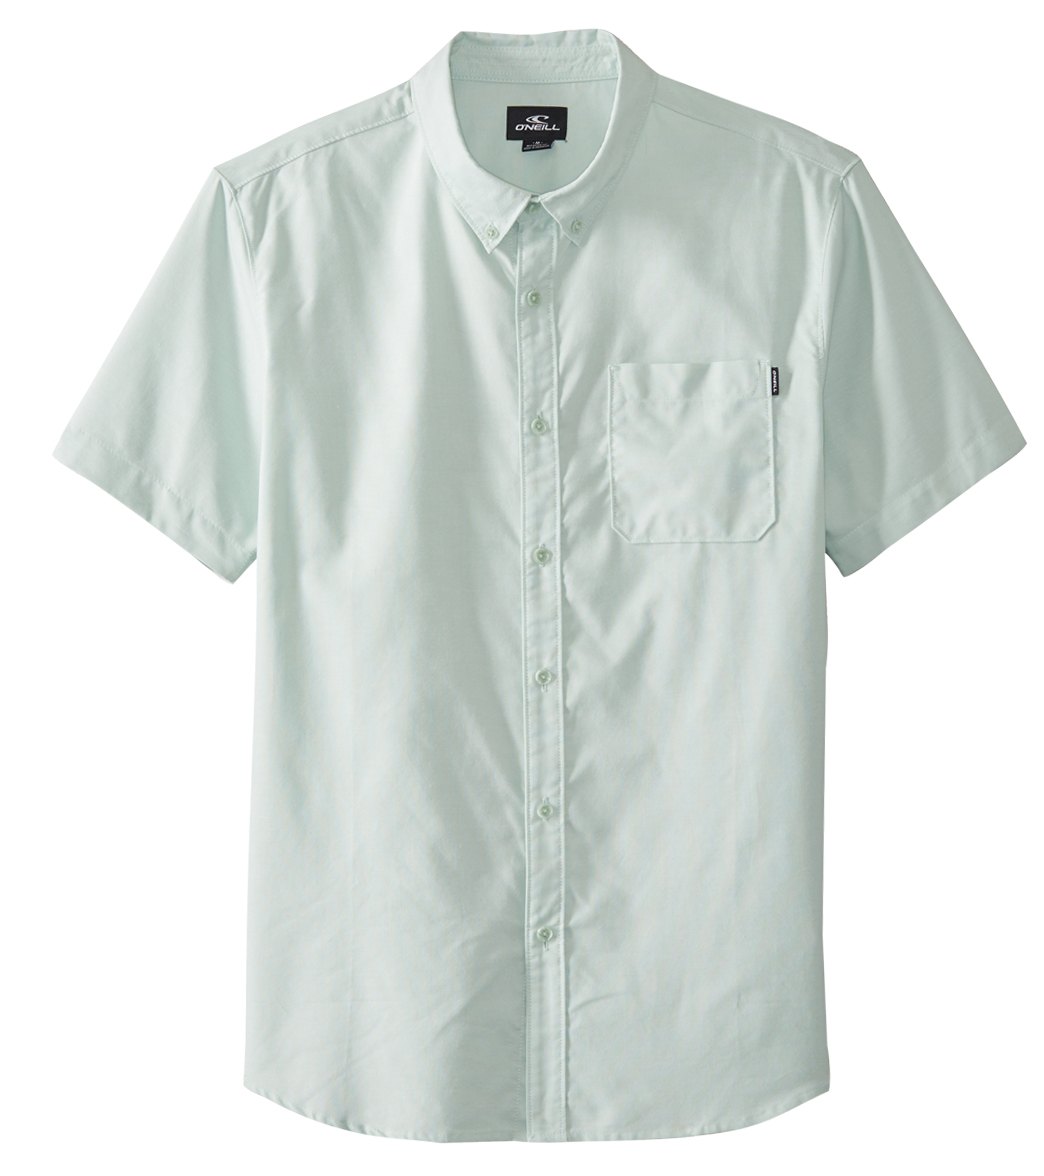 O'neill Men's Banks Shirt - Grayed Jade Small Cotton/Polyester - Swimoutlet.com